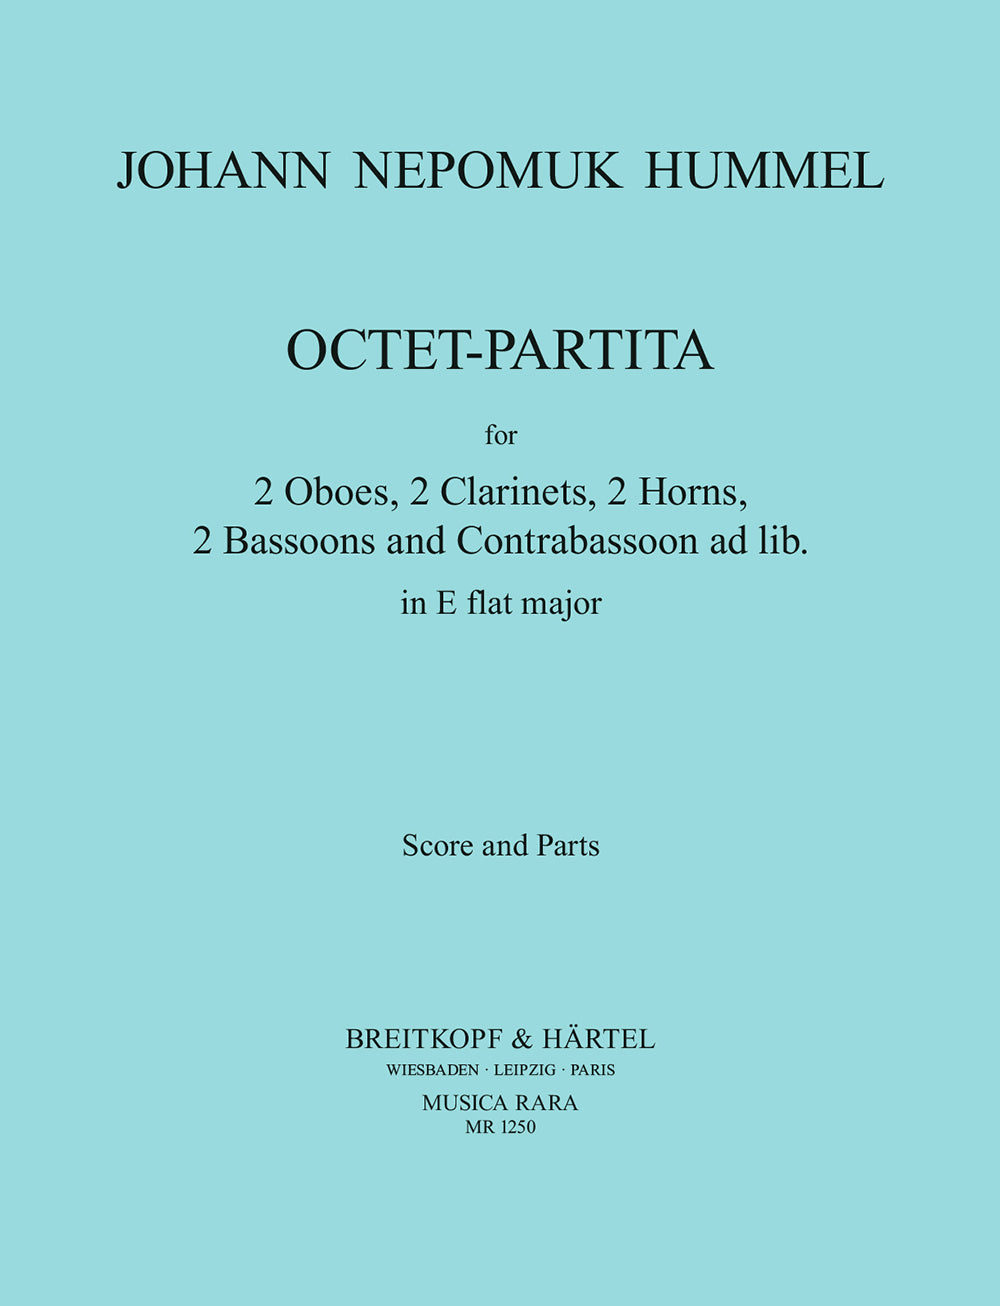 Hummel Octet Partita in Eb Full Score 2 Oboes, 2 Clarinets, 2 Bassoons & 2 Horns